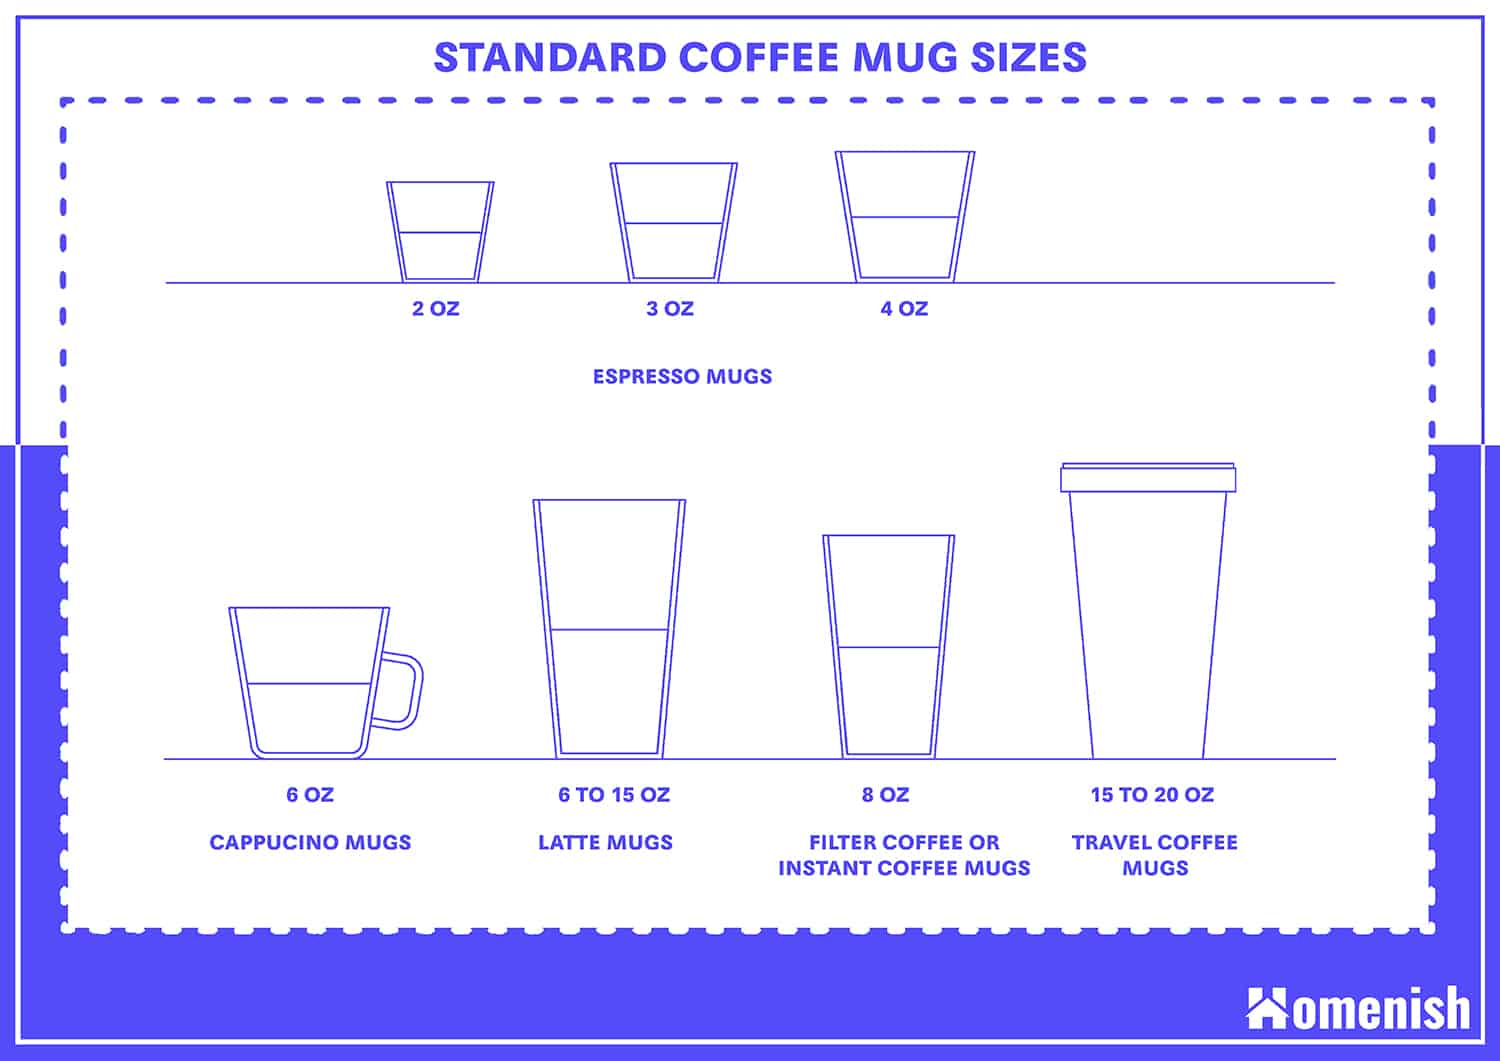 Standard Coffee Mug Sizes